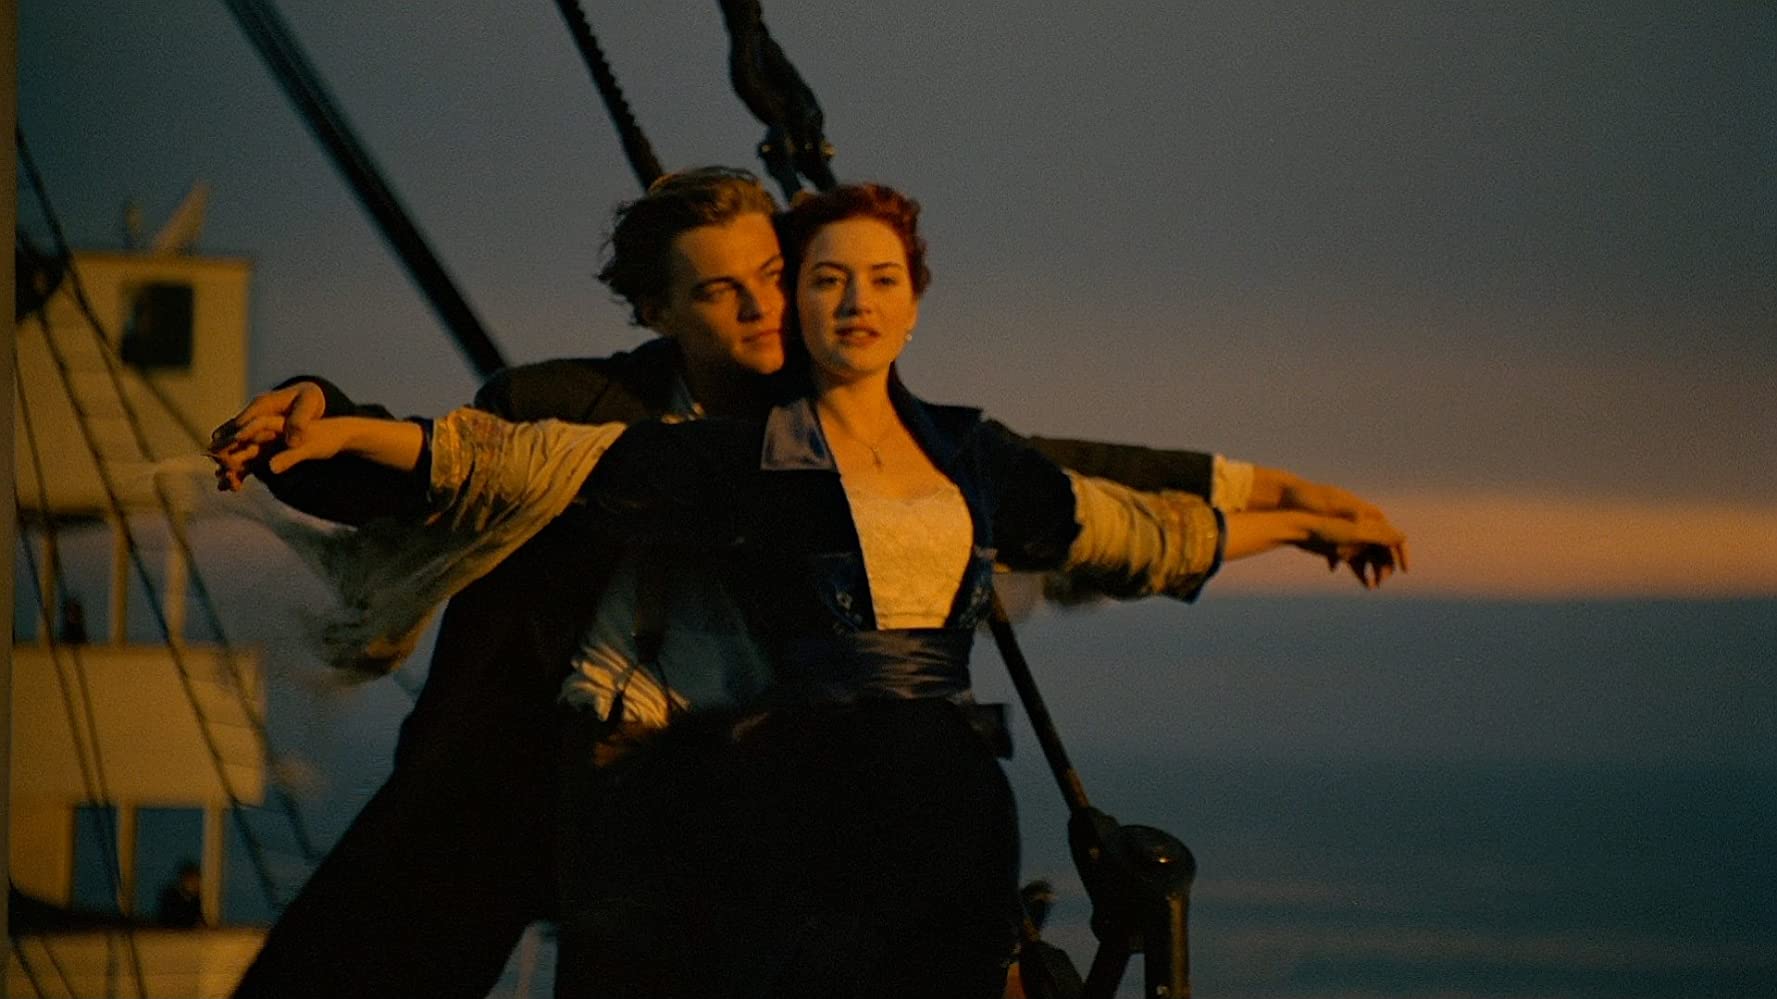 Leonardo DiCaprio and Kate Winslet in Titanic (1997)